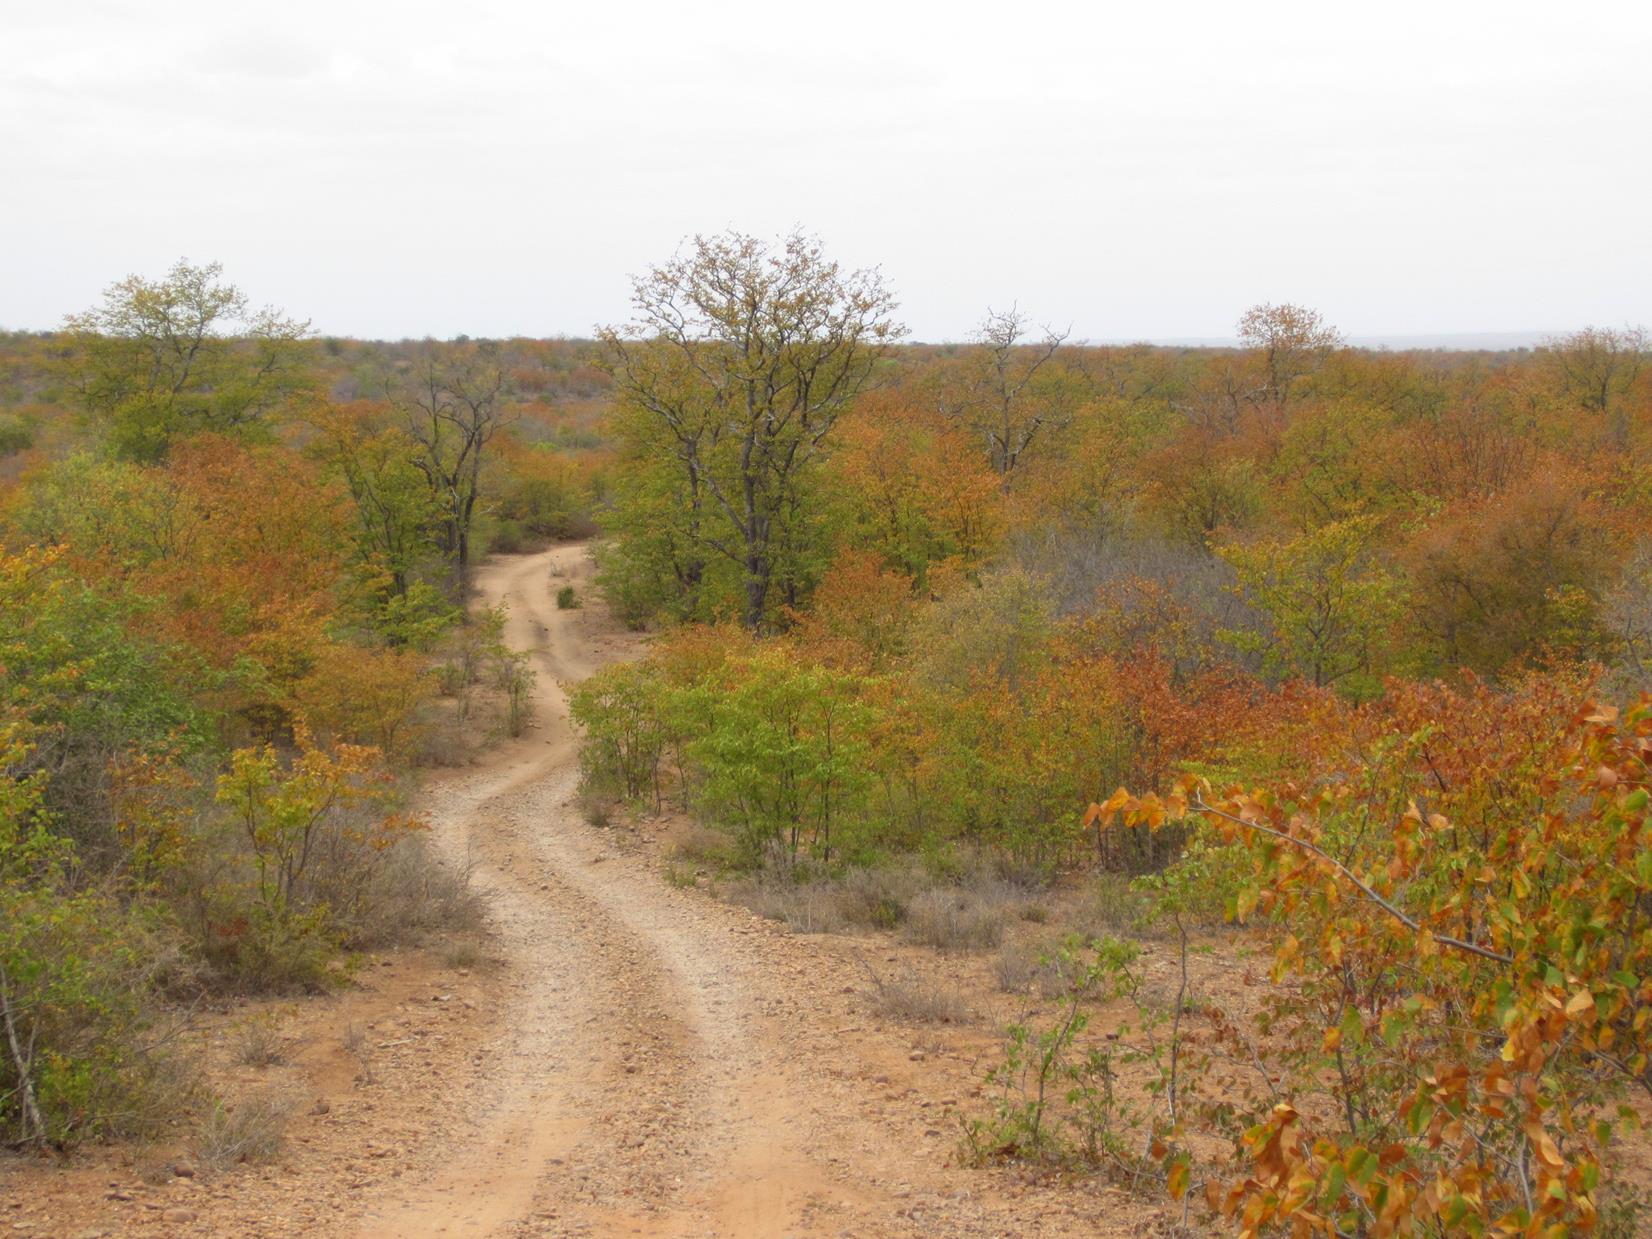 Narrow track winding through Mopane trees. 